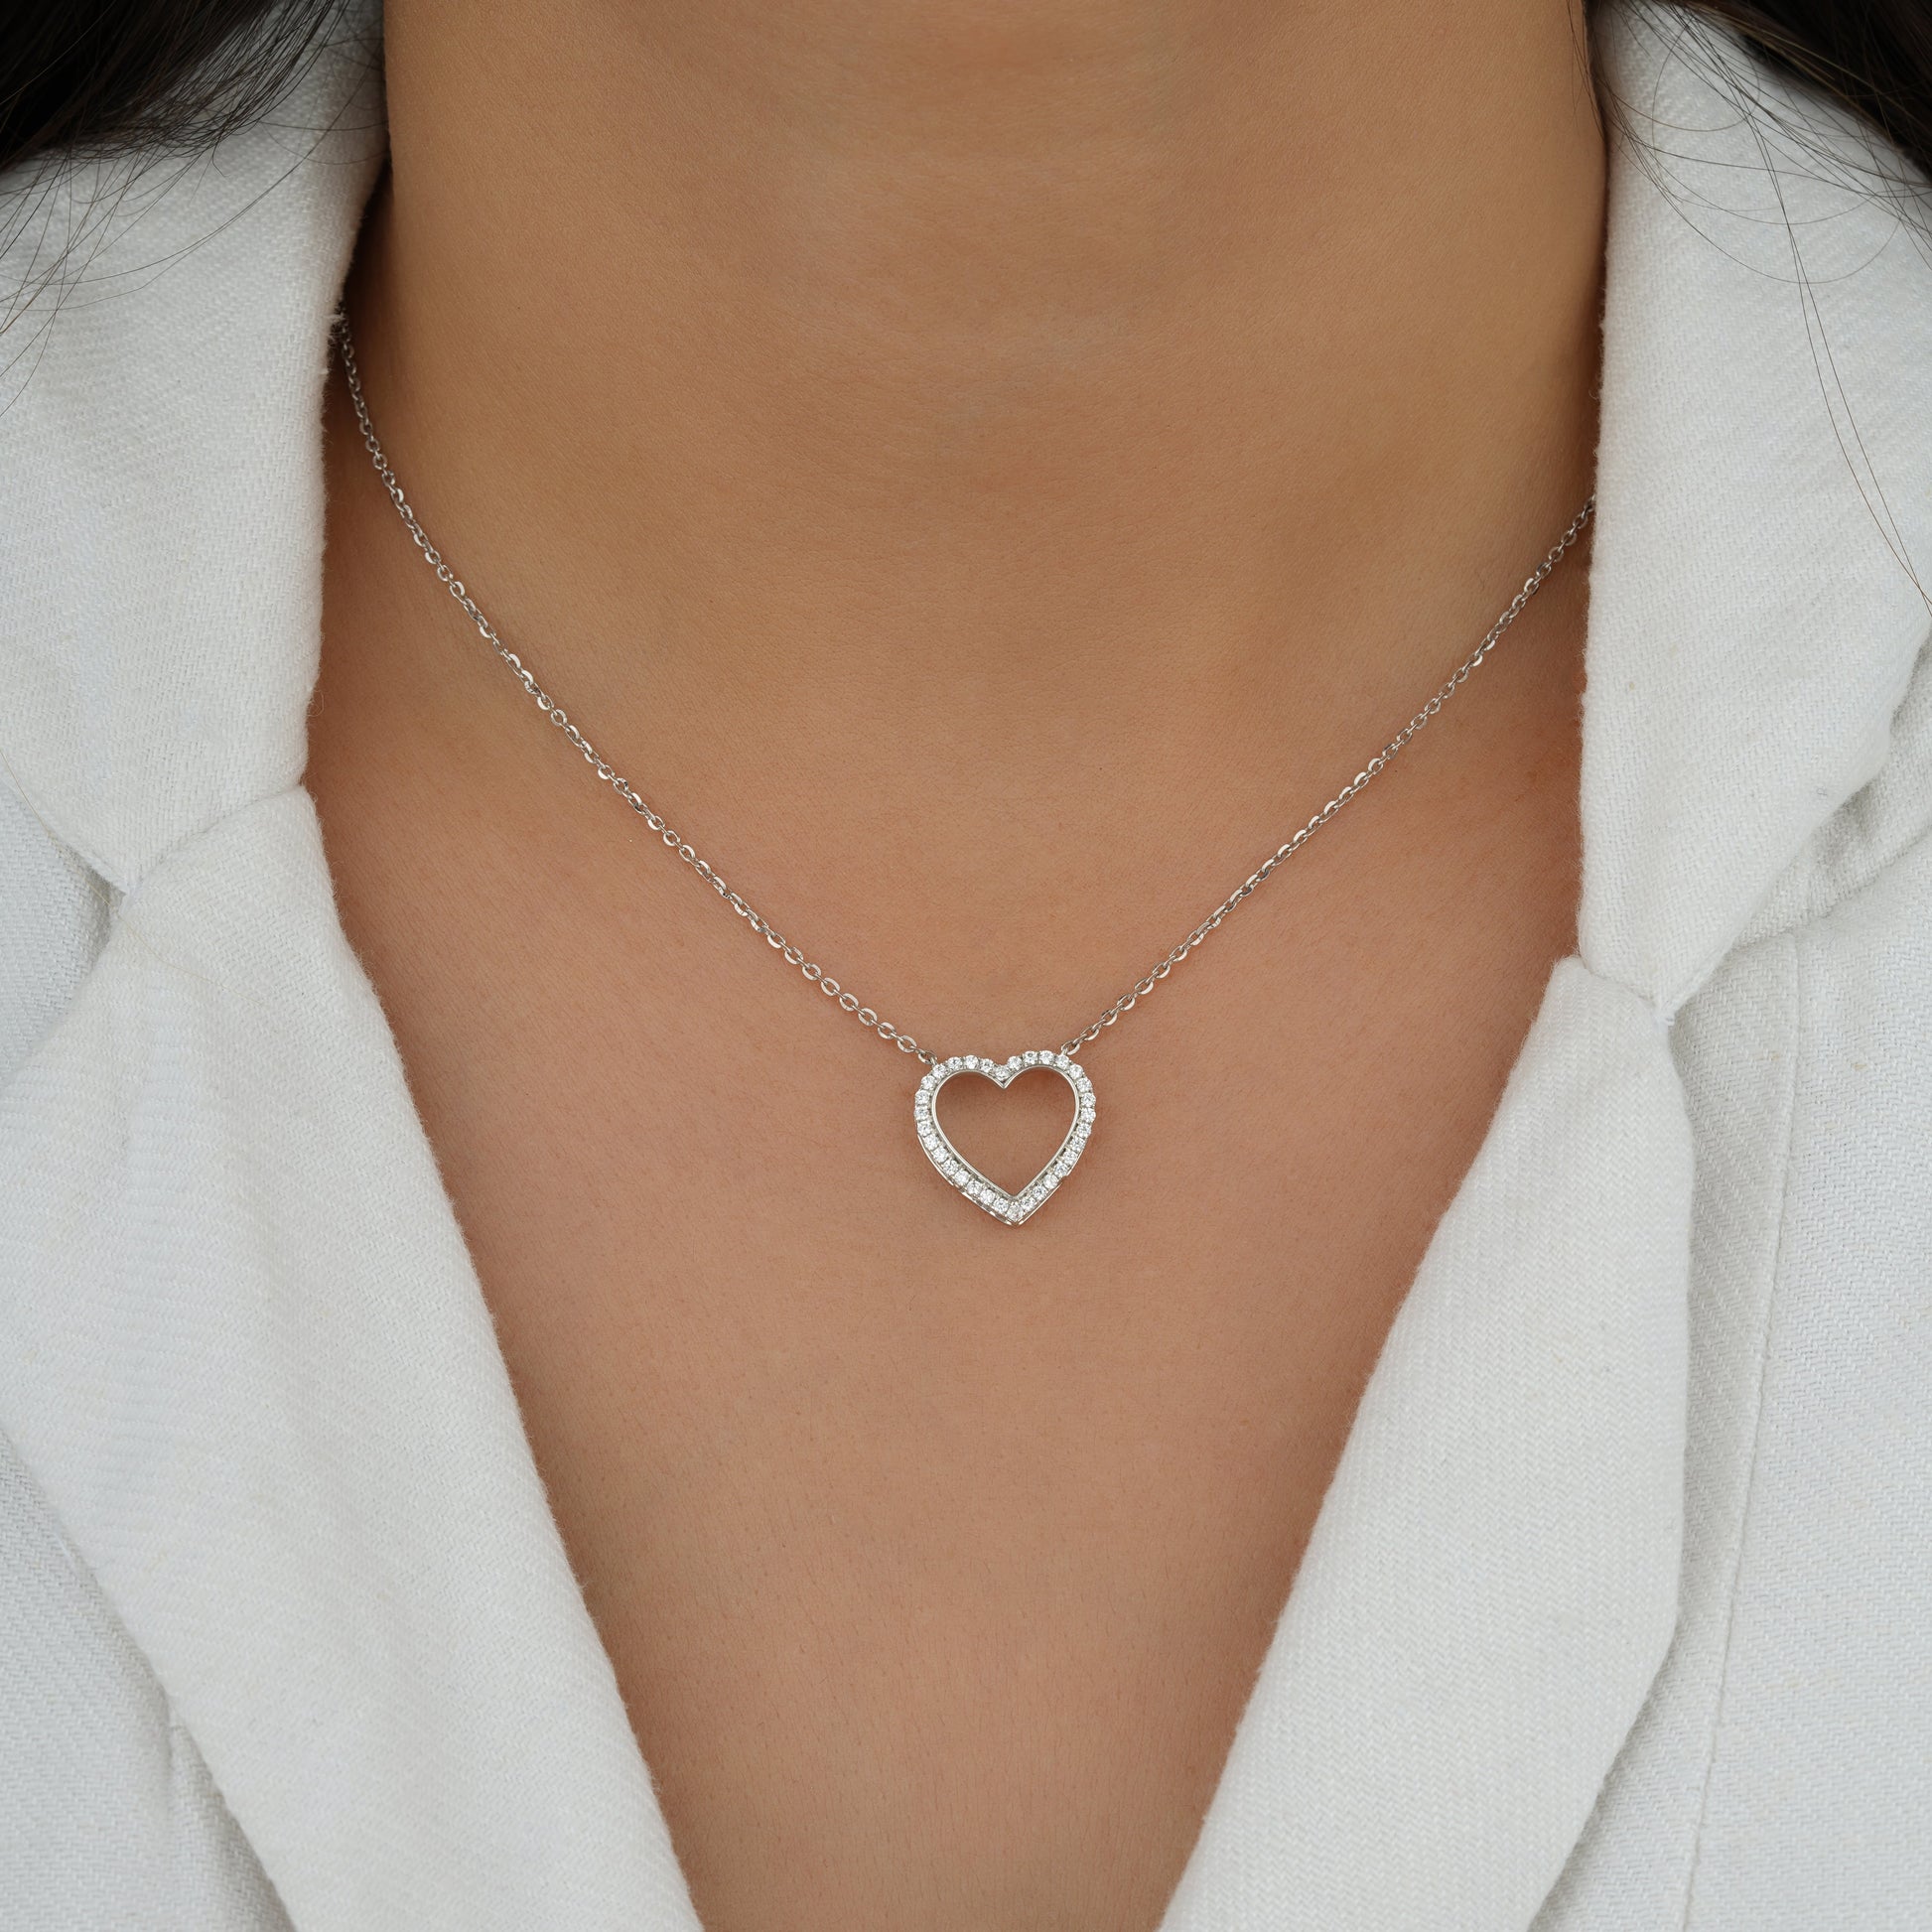 Round diamond heart shaped necklace